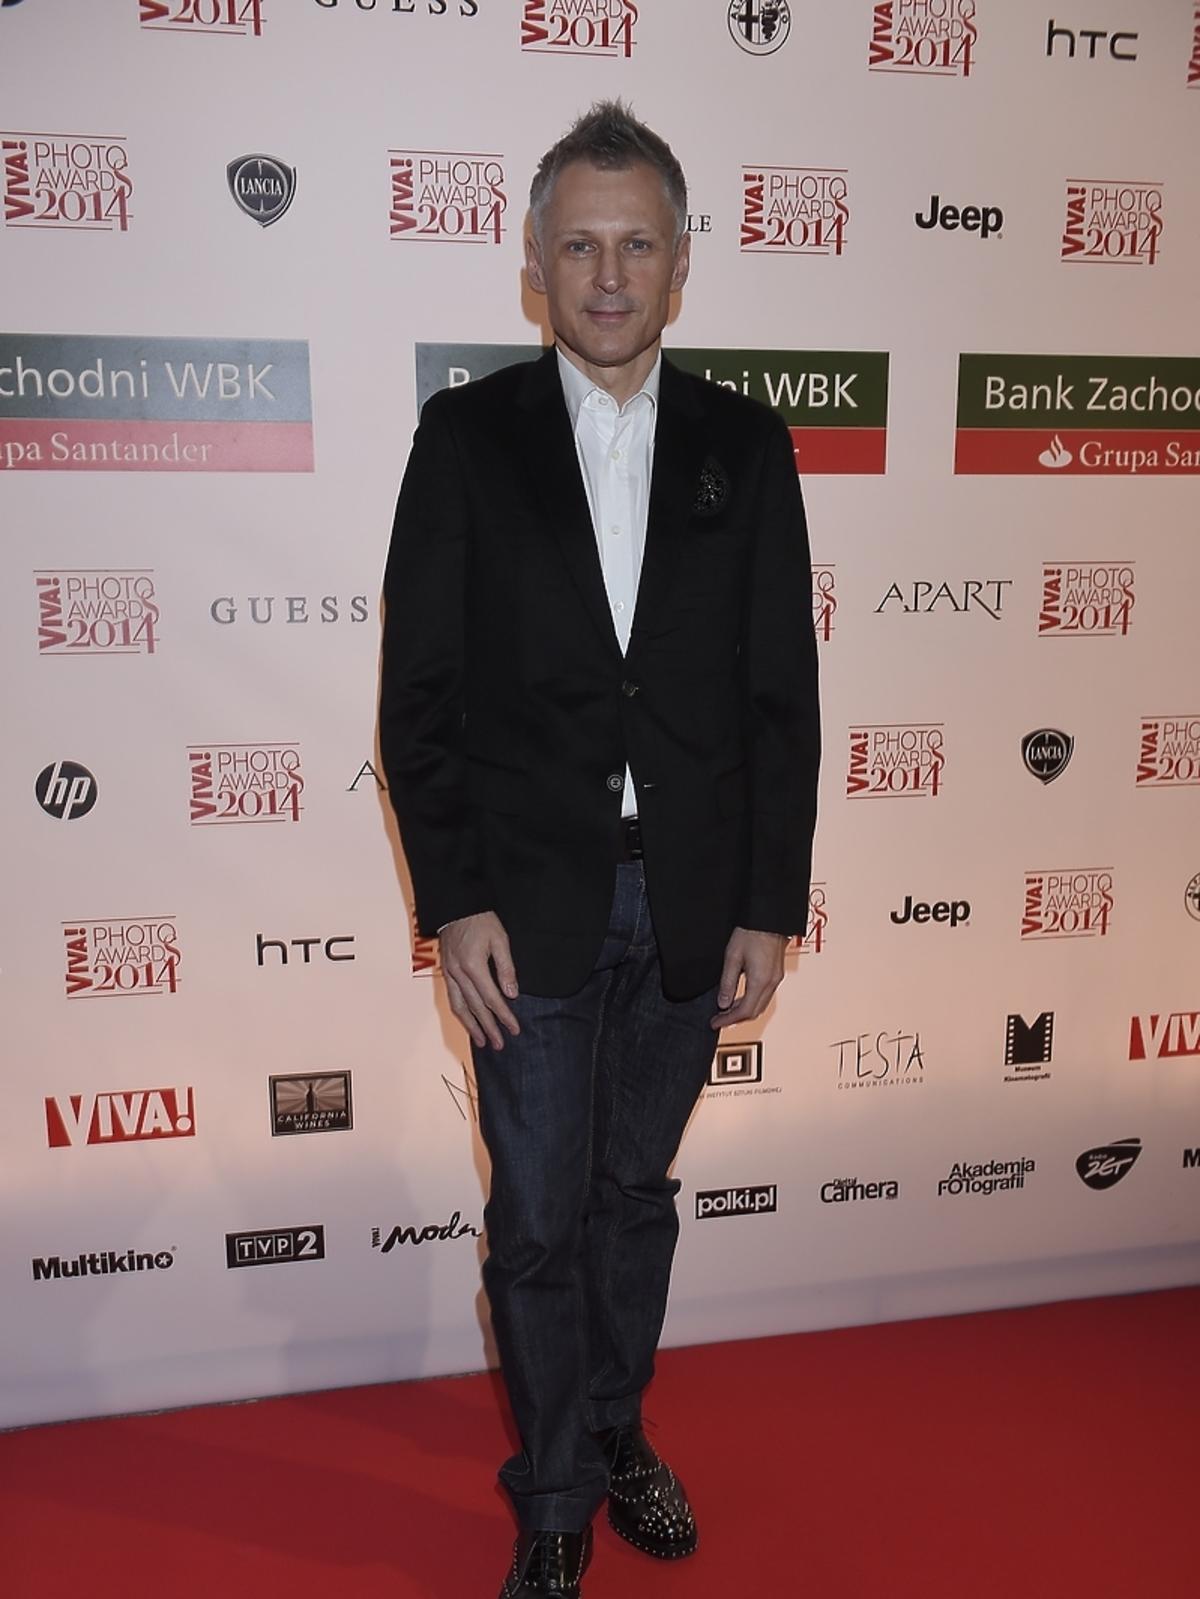 Robert Kozyra na gali Viva! Photo Awards 2014